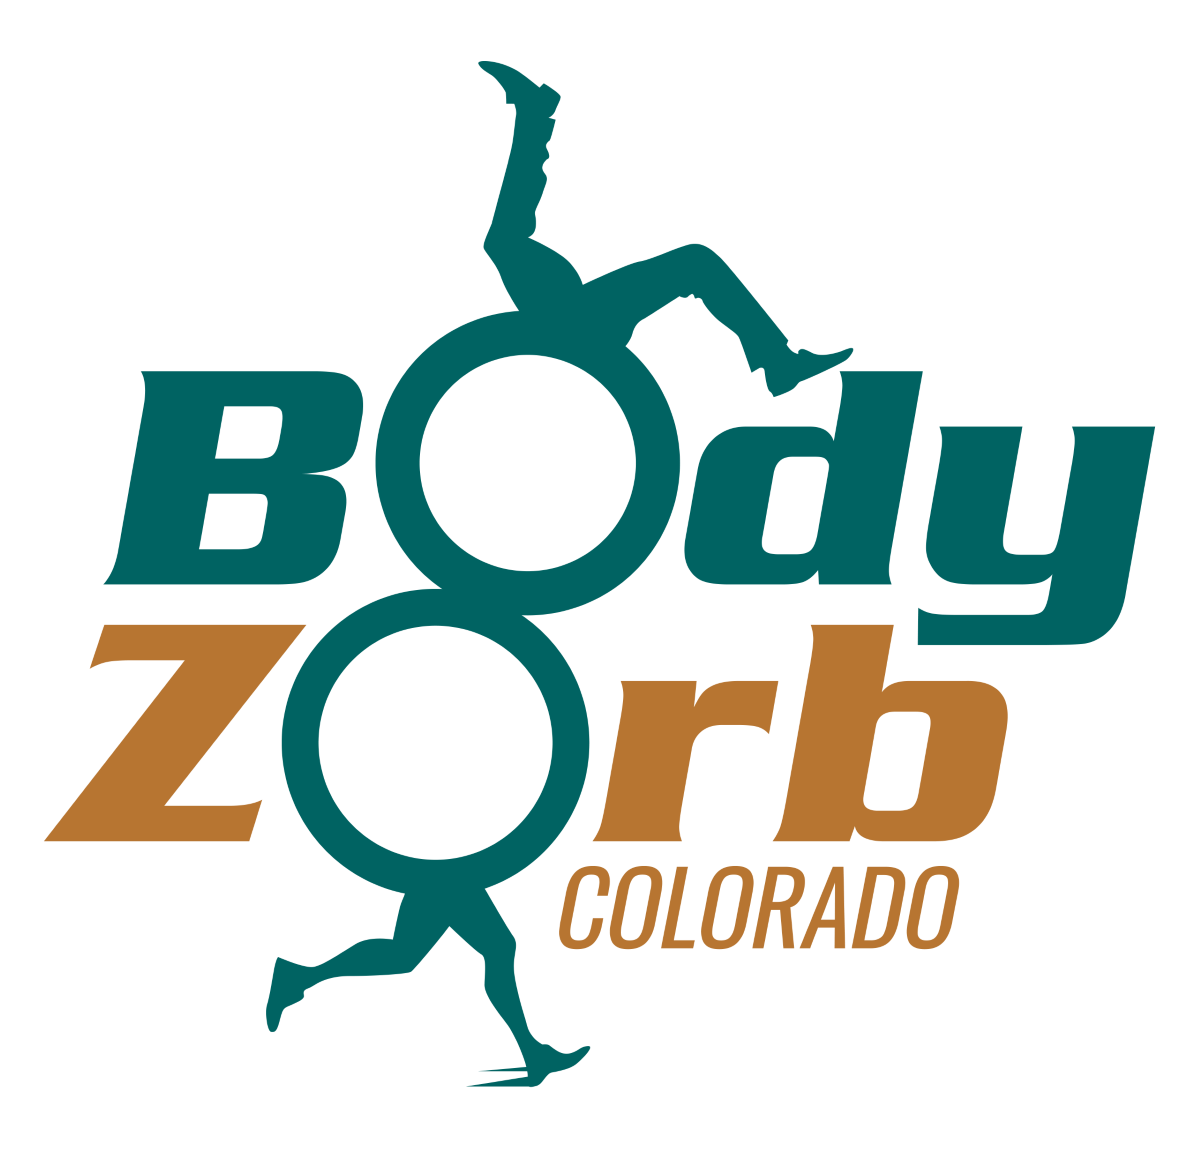 renting body zorb balls and bubble soccer balls in Colorado Springs, Denver, and Pueblo